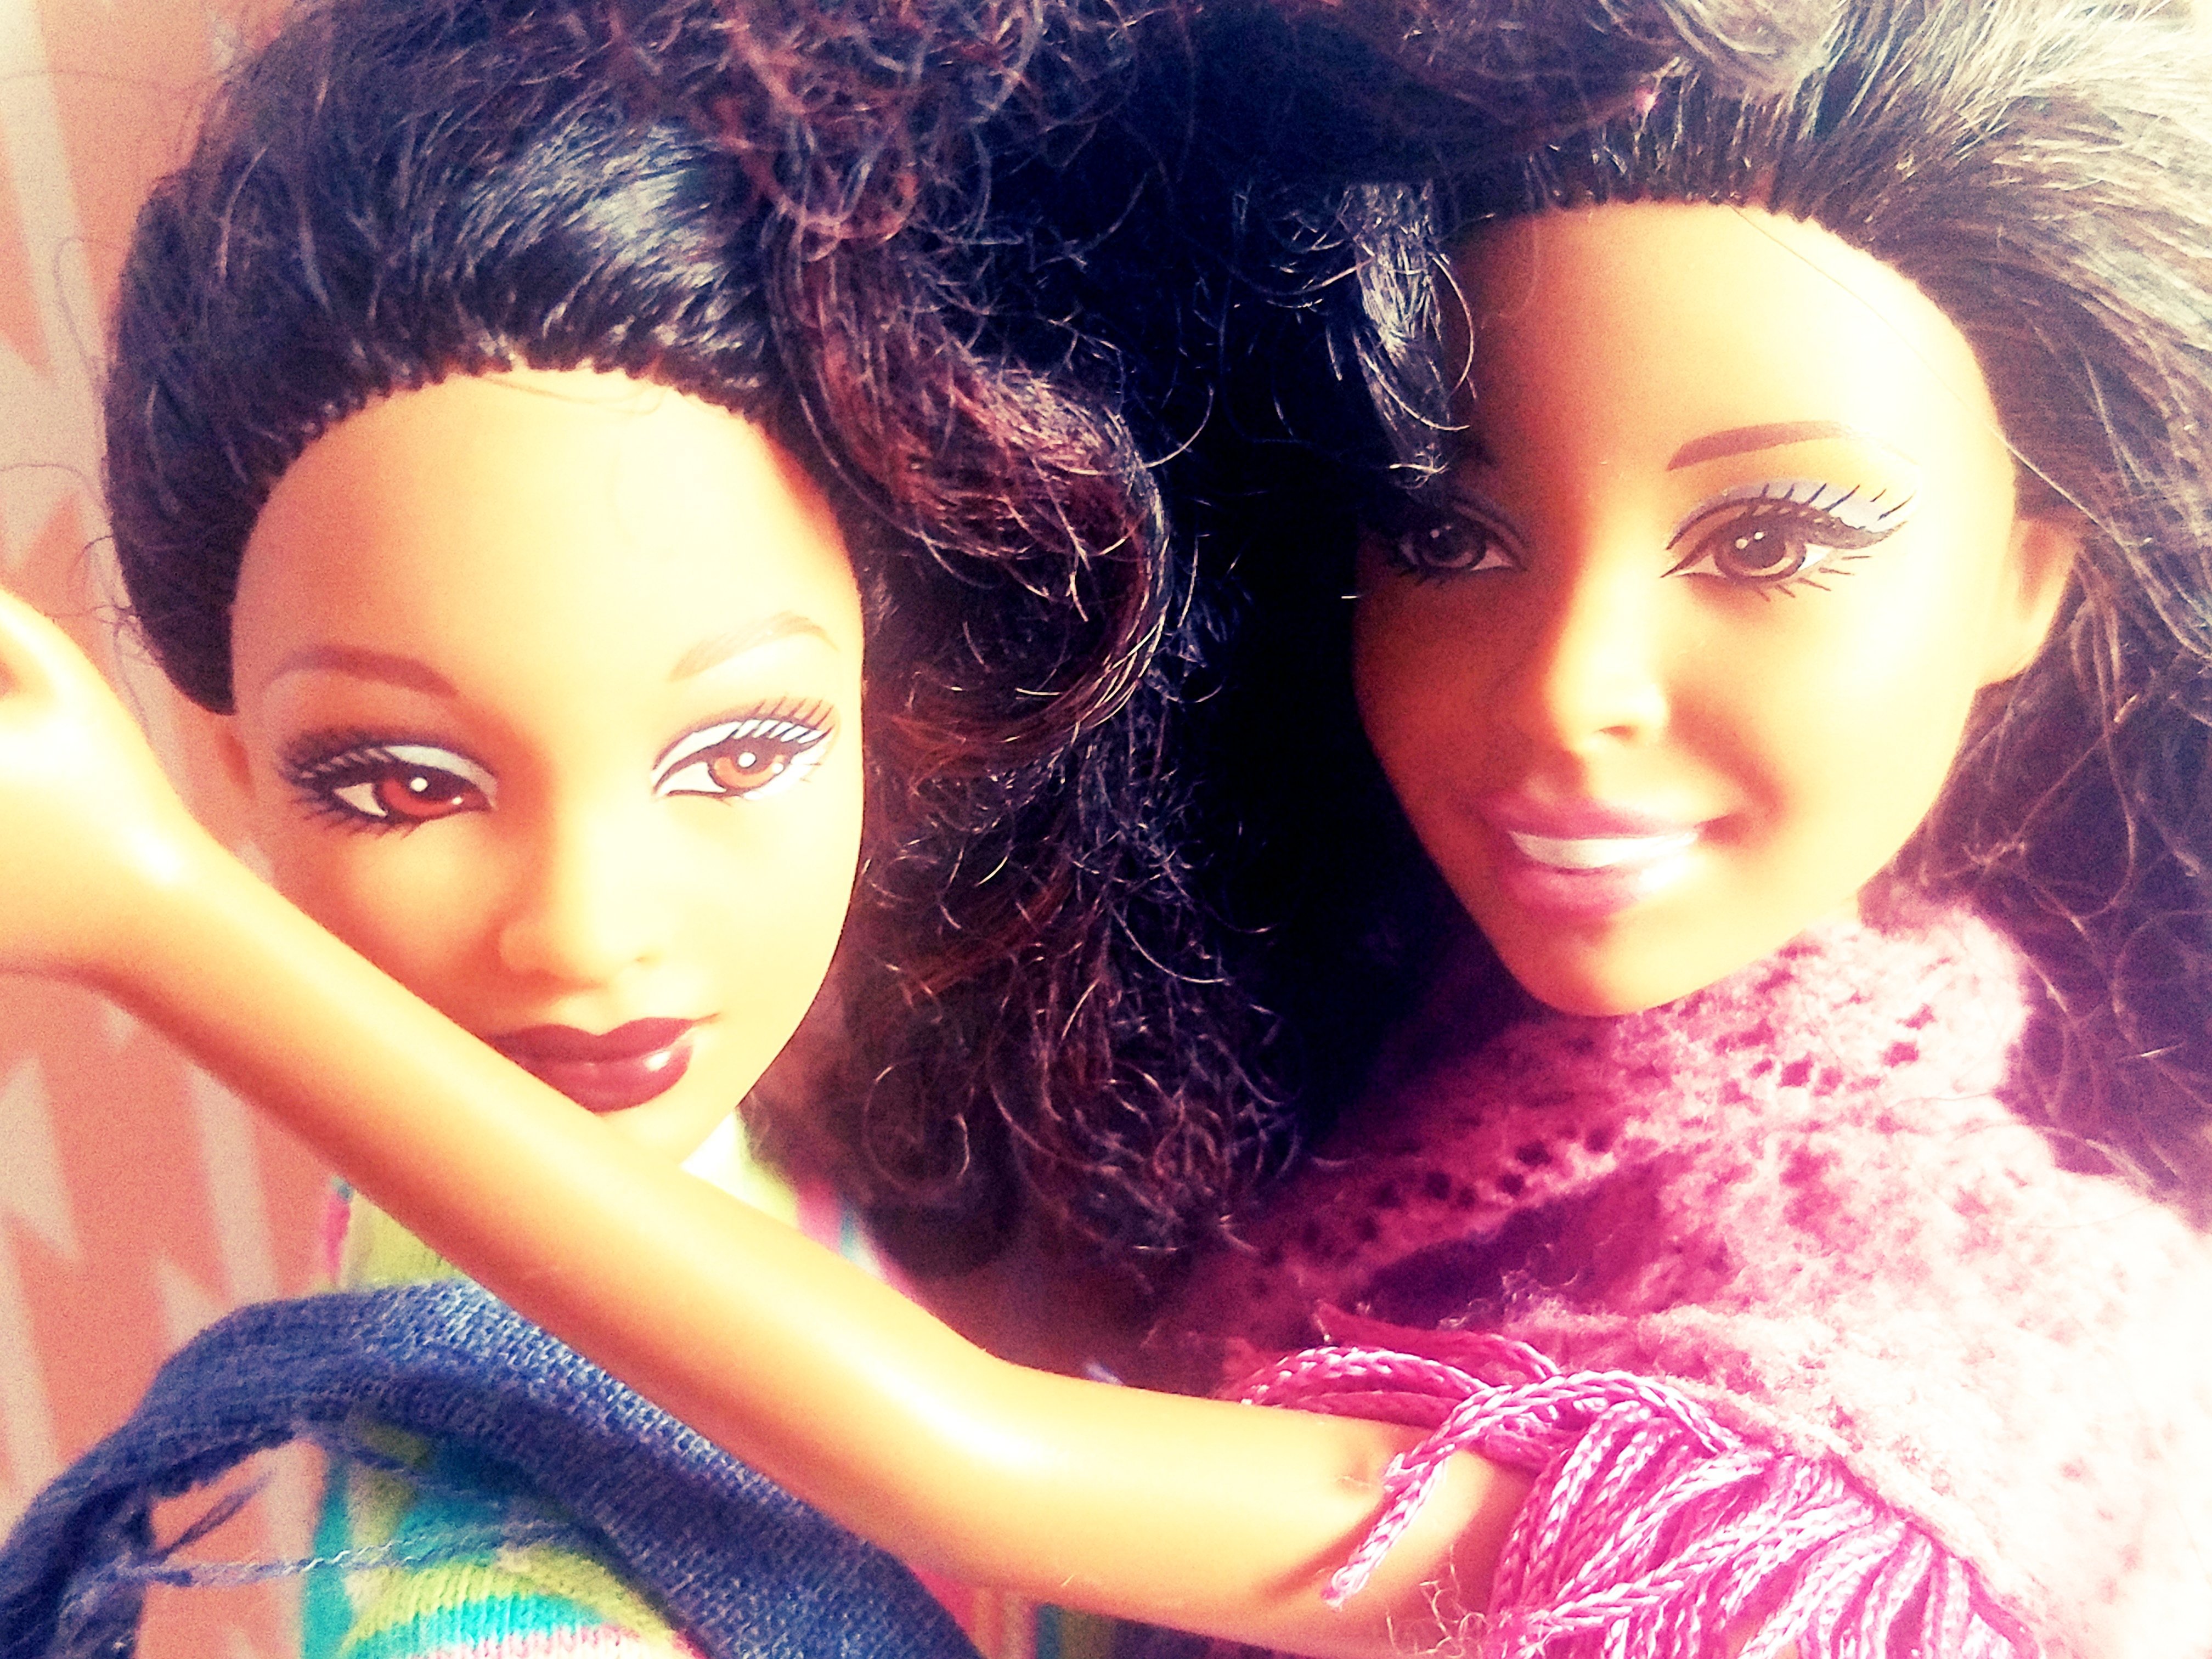 Barbiematters